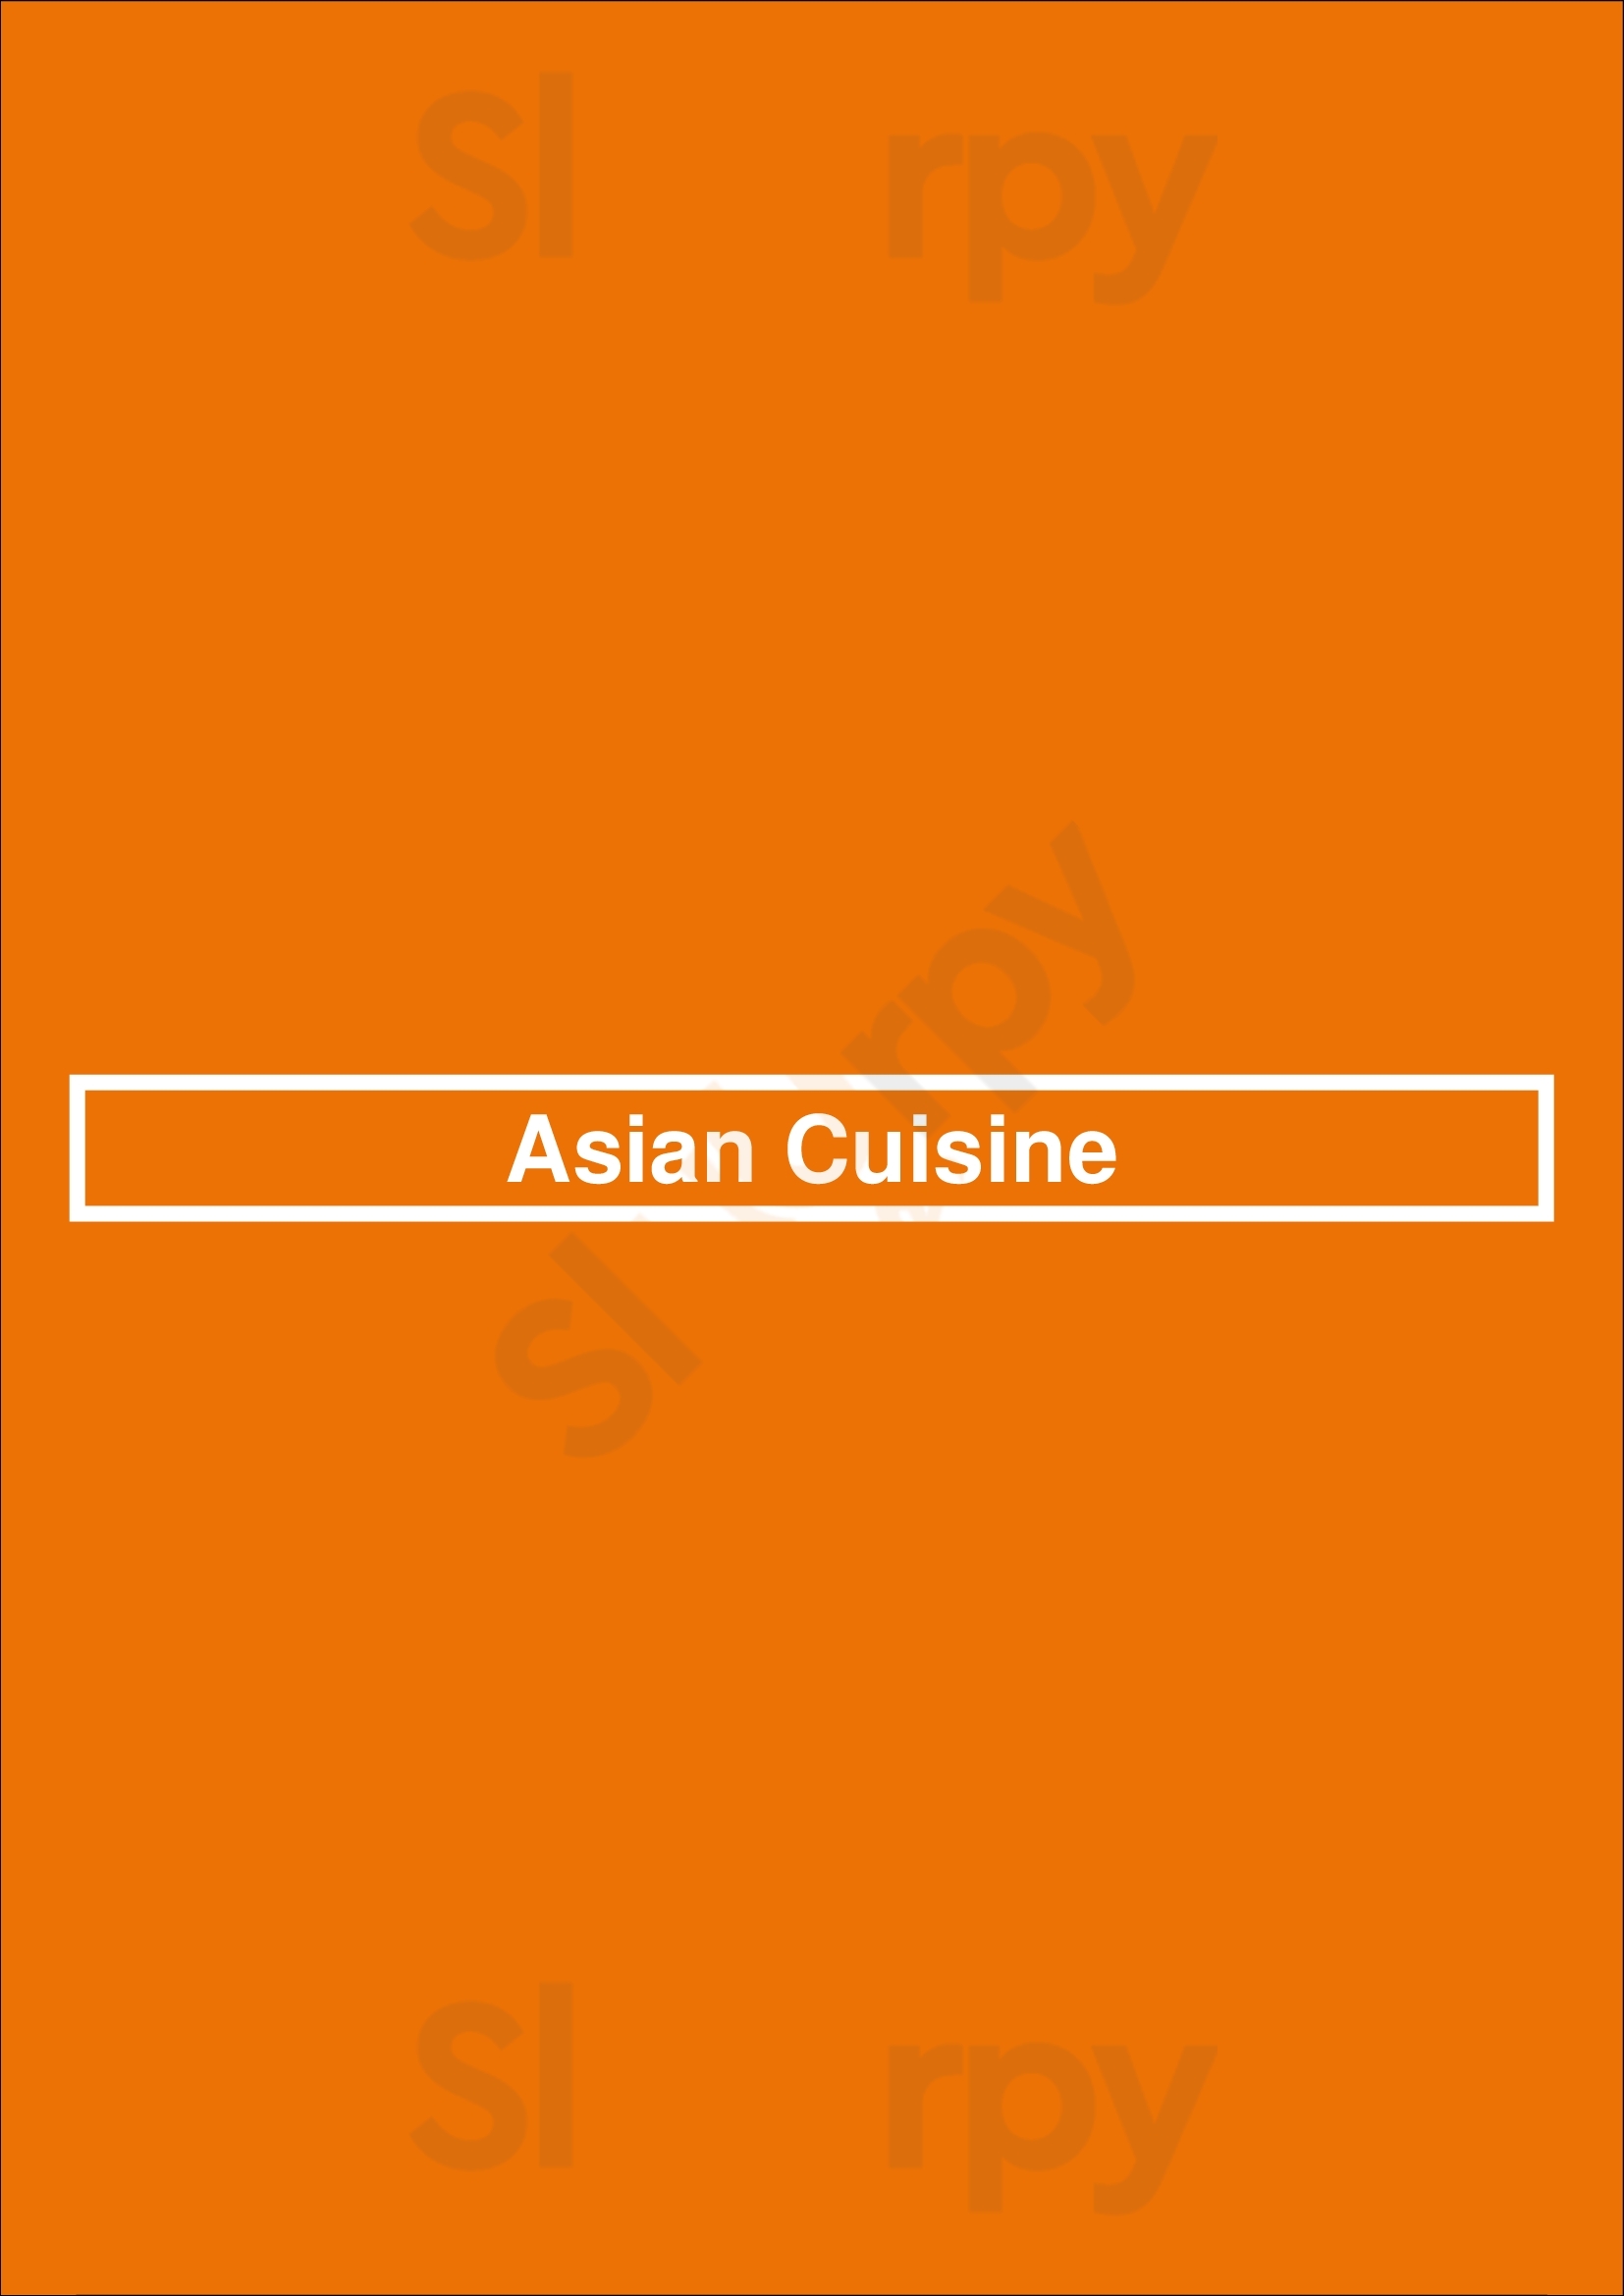 Asian Cuisine Orlando Menu - 1